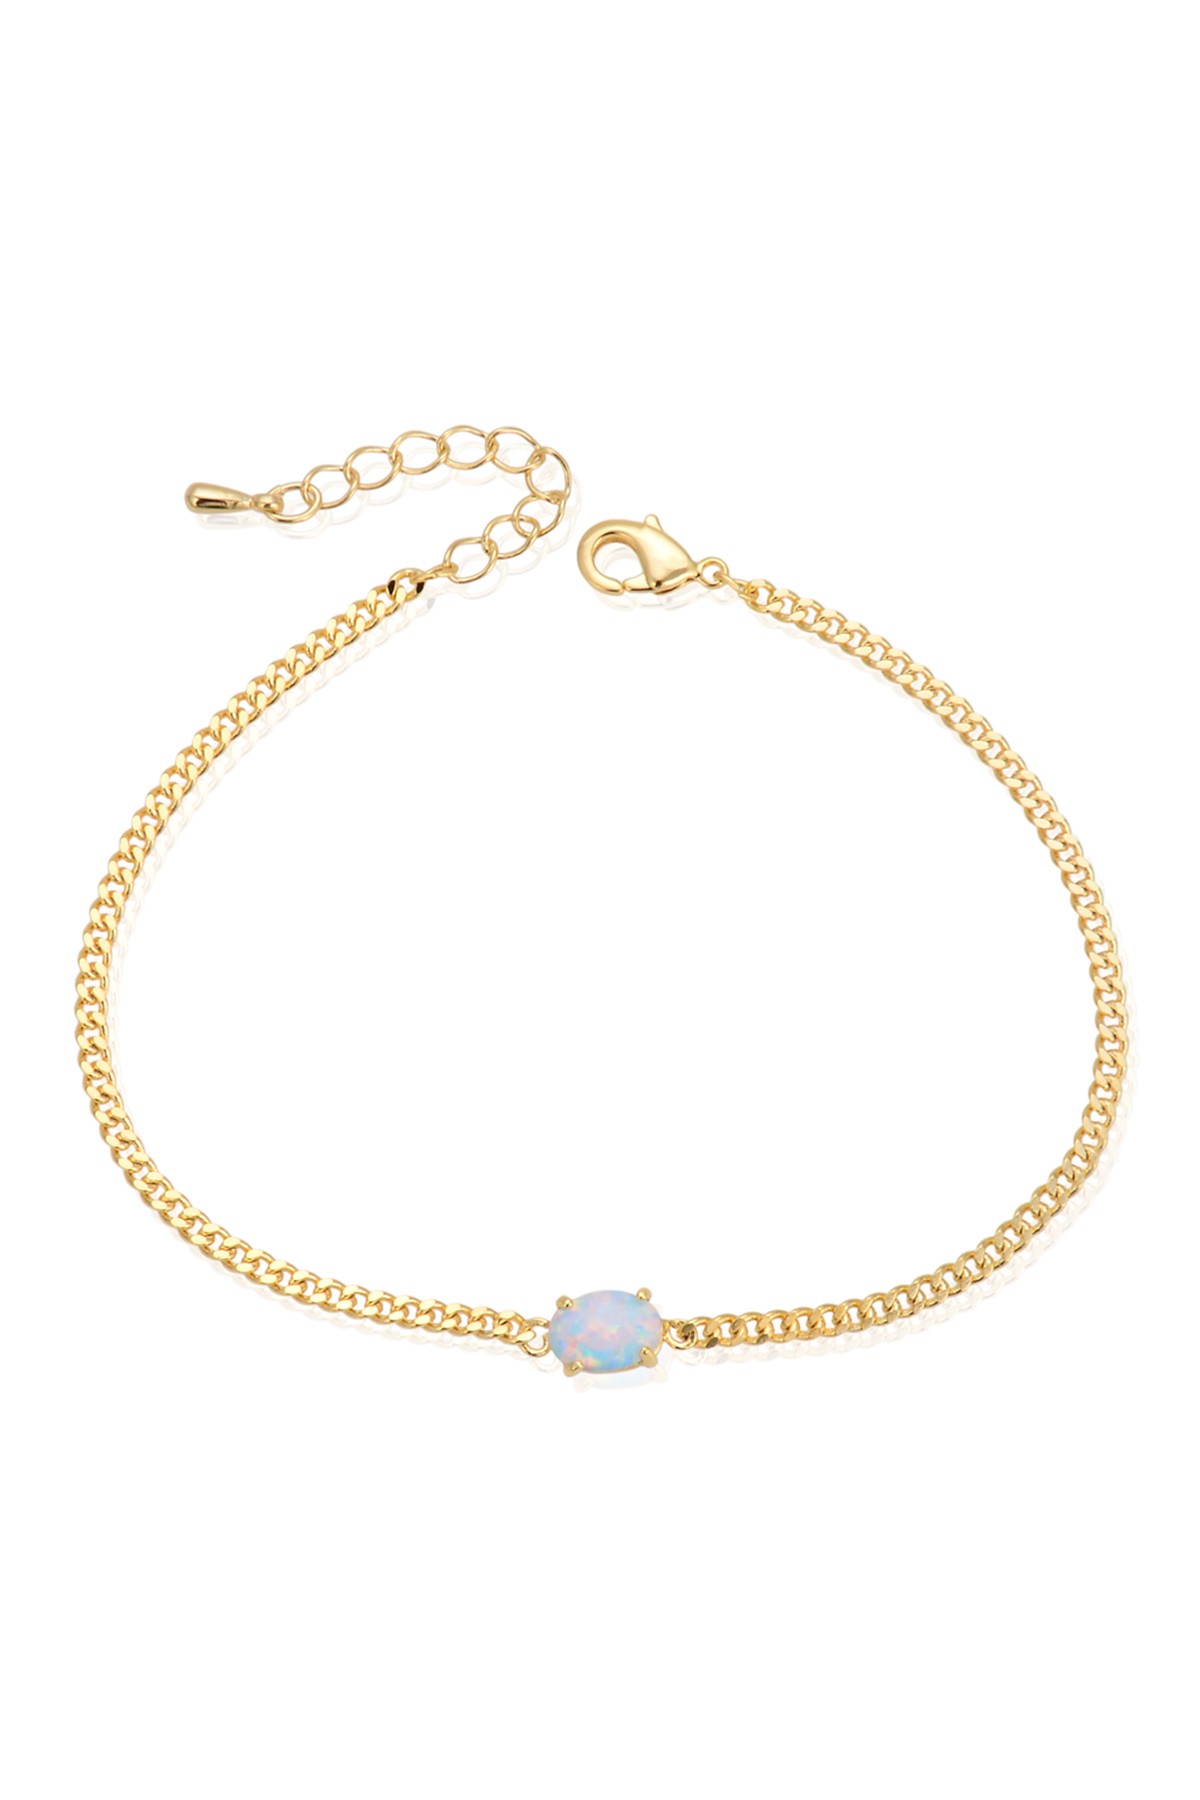 White Opal Chain Link Bracelet Eye Candy Los Angeles